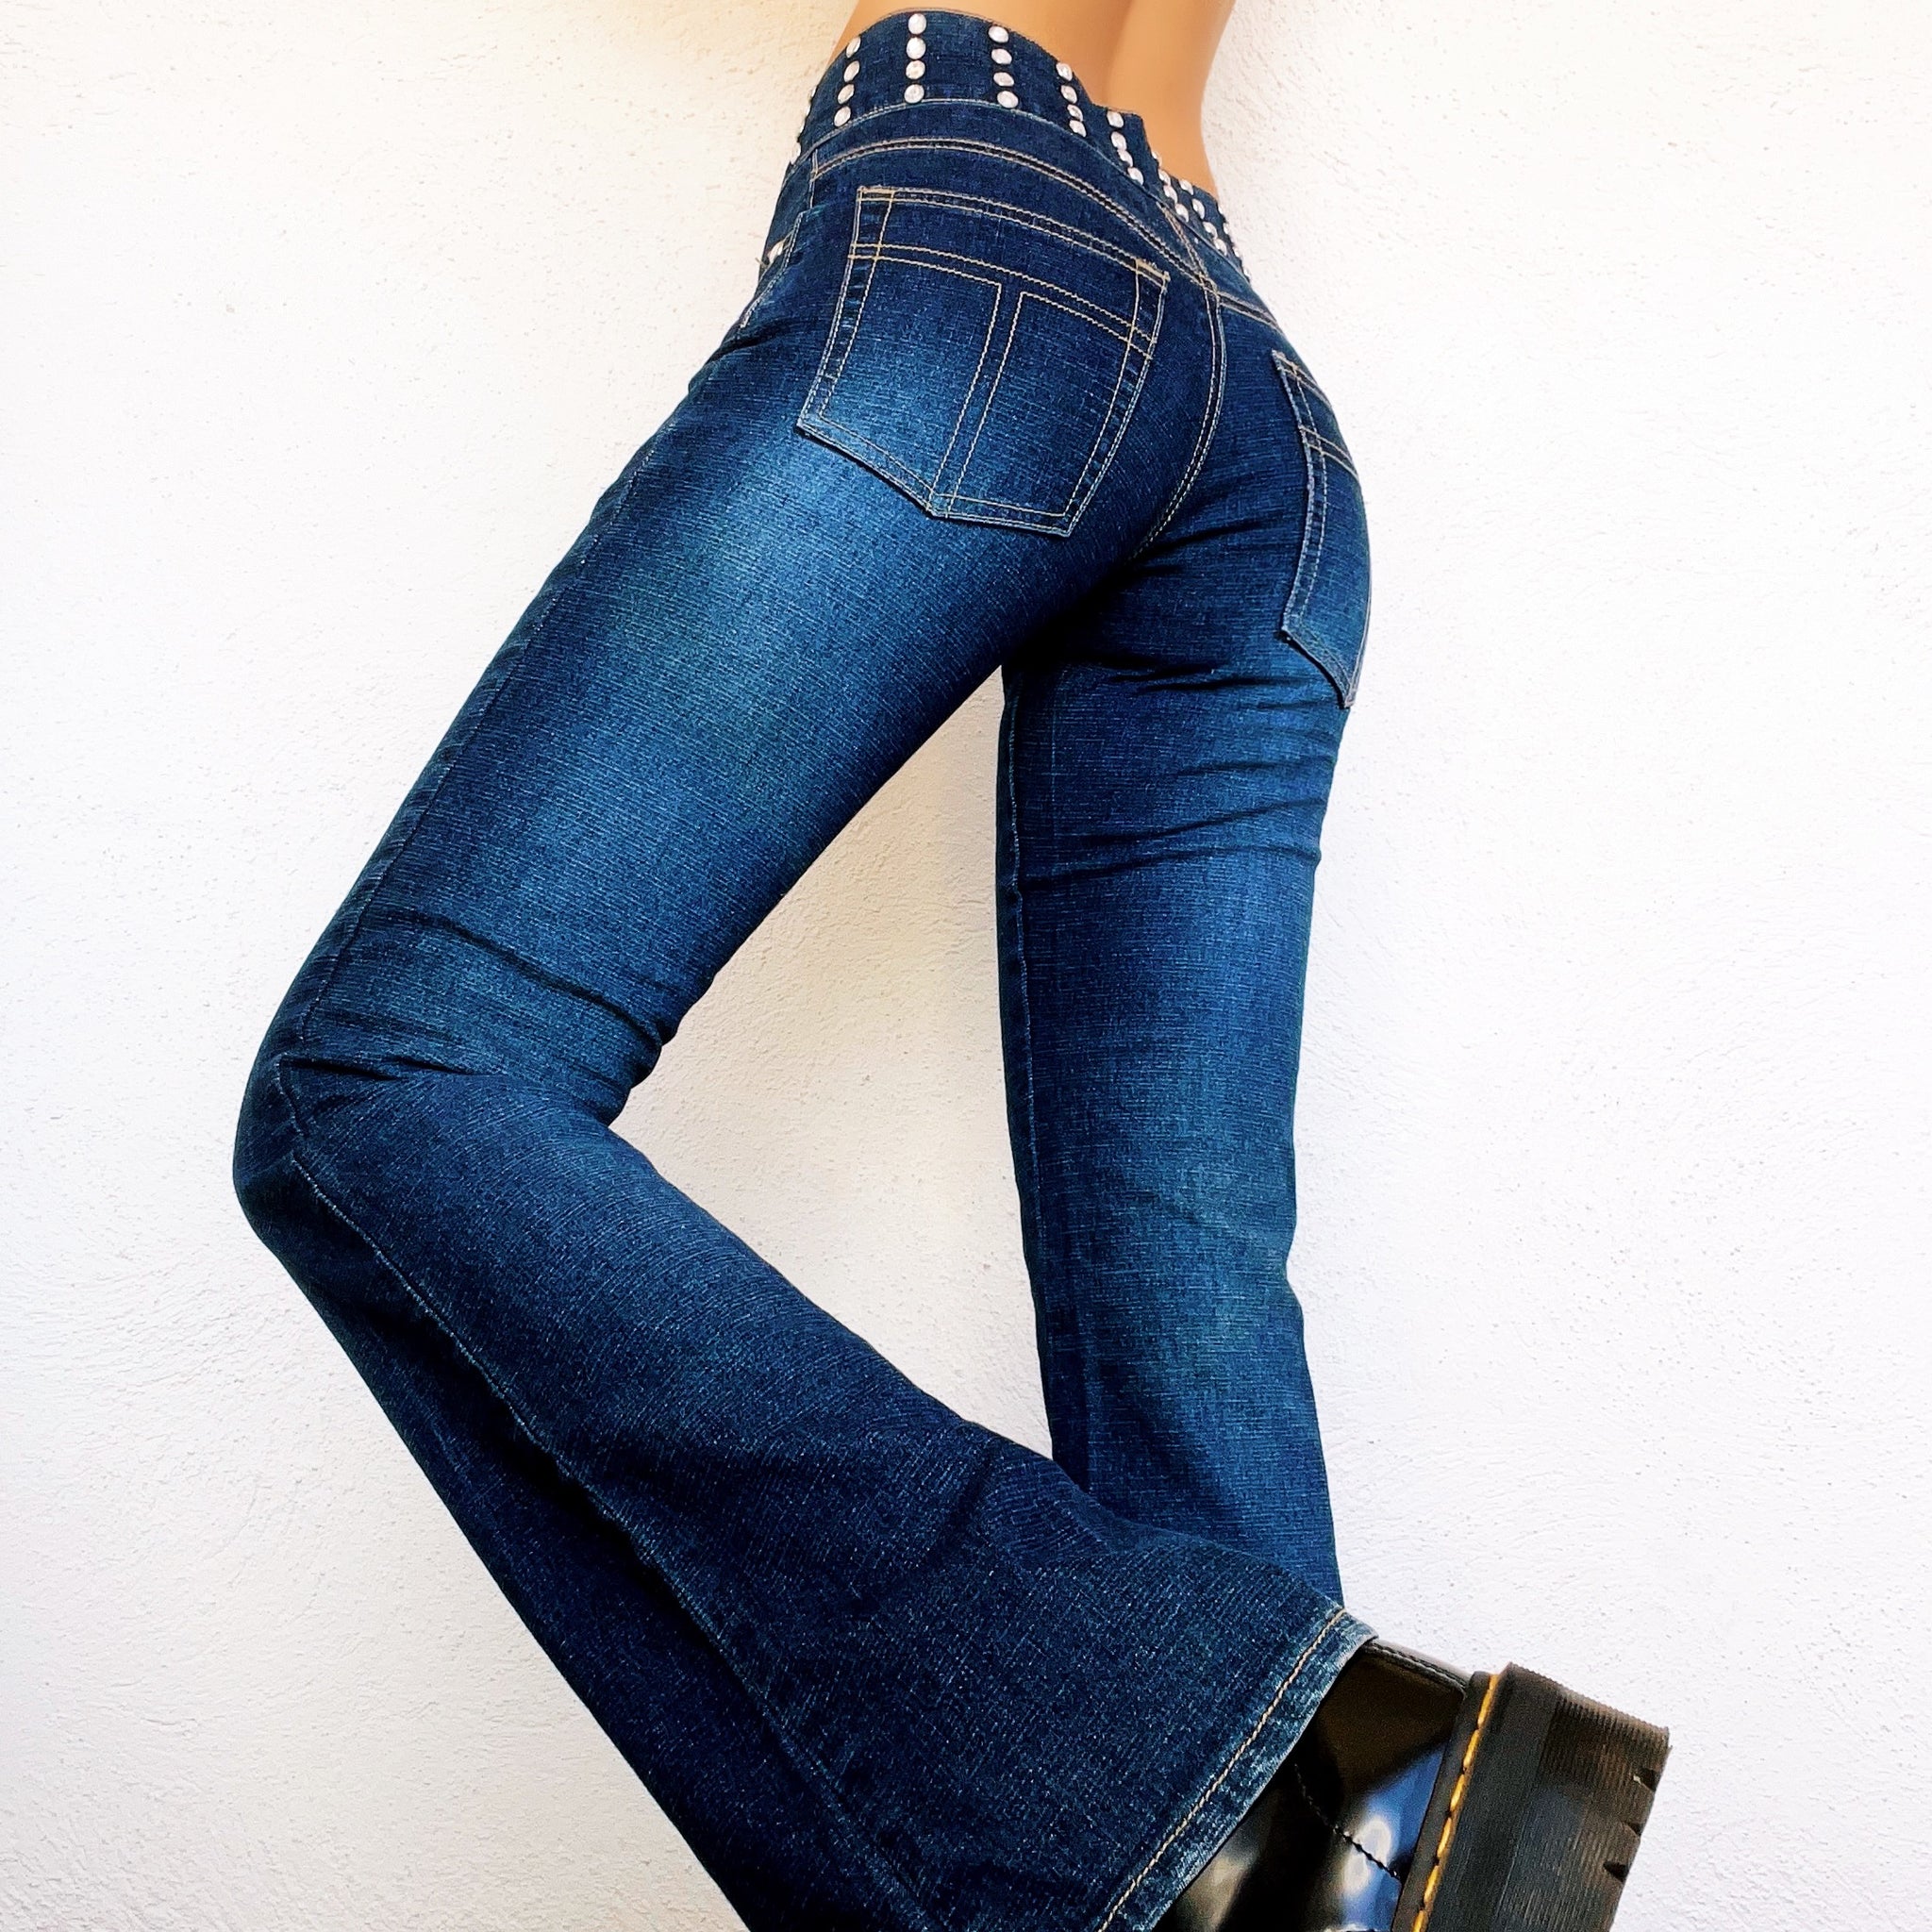 Early 2000s Rhinestone Flare Jeans